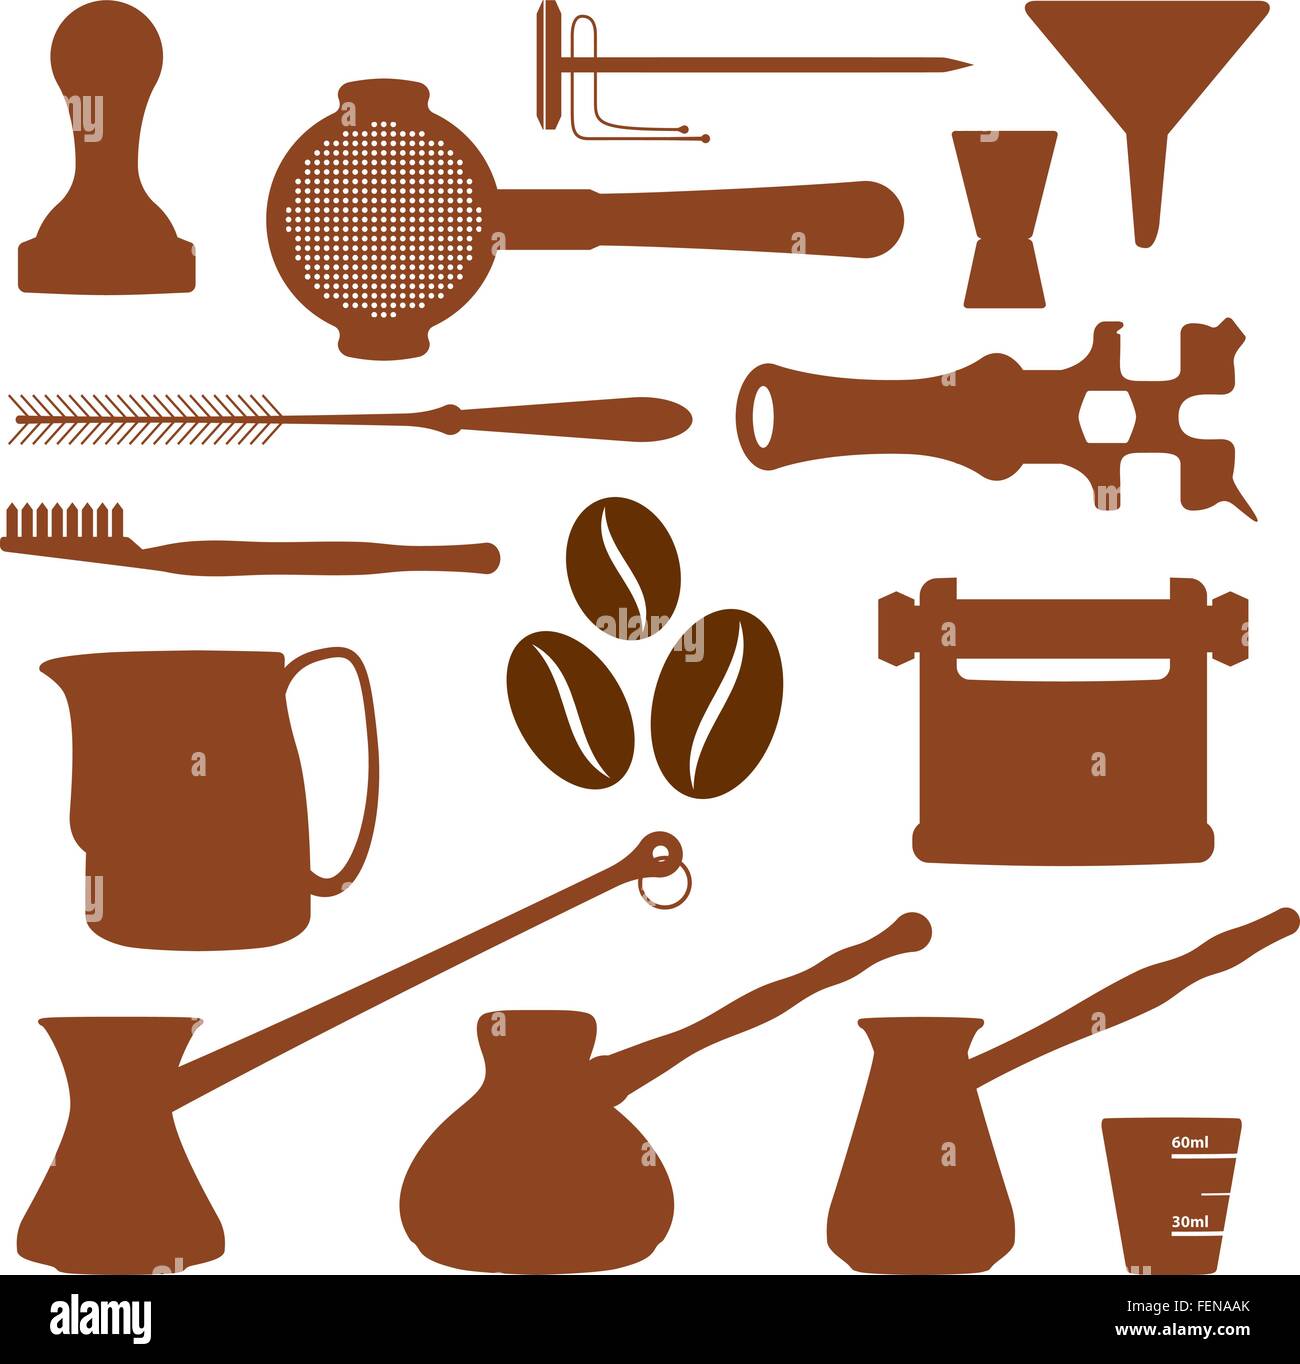 https://c8.alamy.com/comp/FENAAK/vector-solid-colors-coffee-set-instruments-barista-equipment-set-FENAAK.jpg